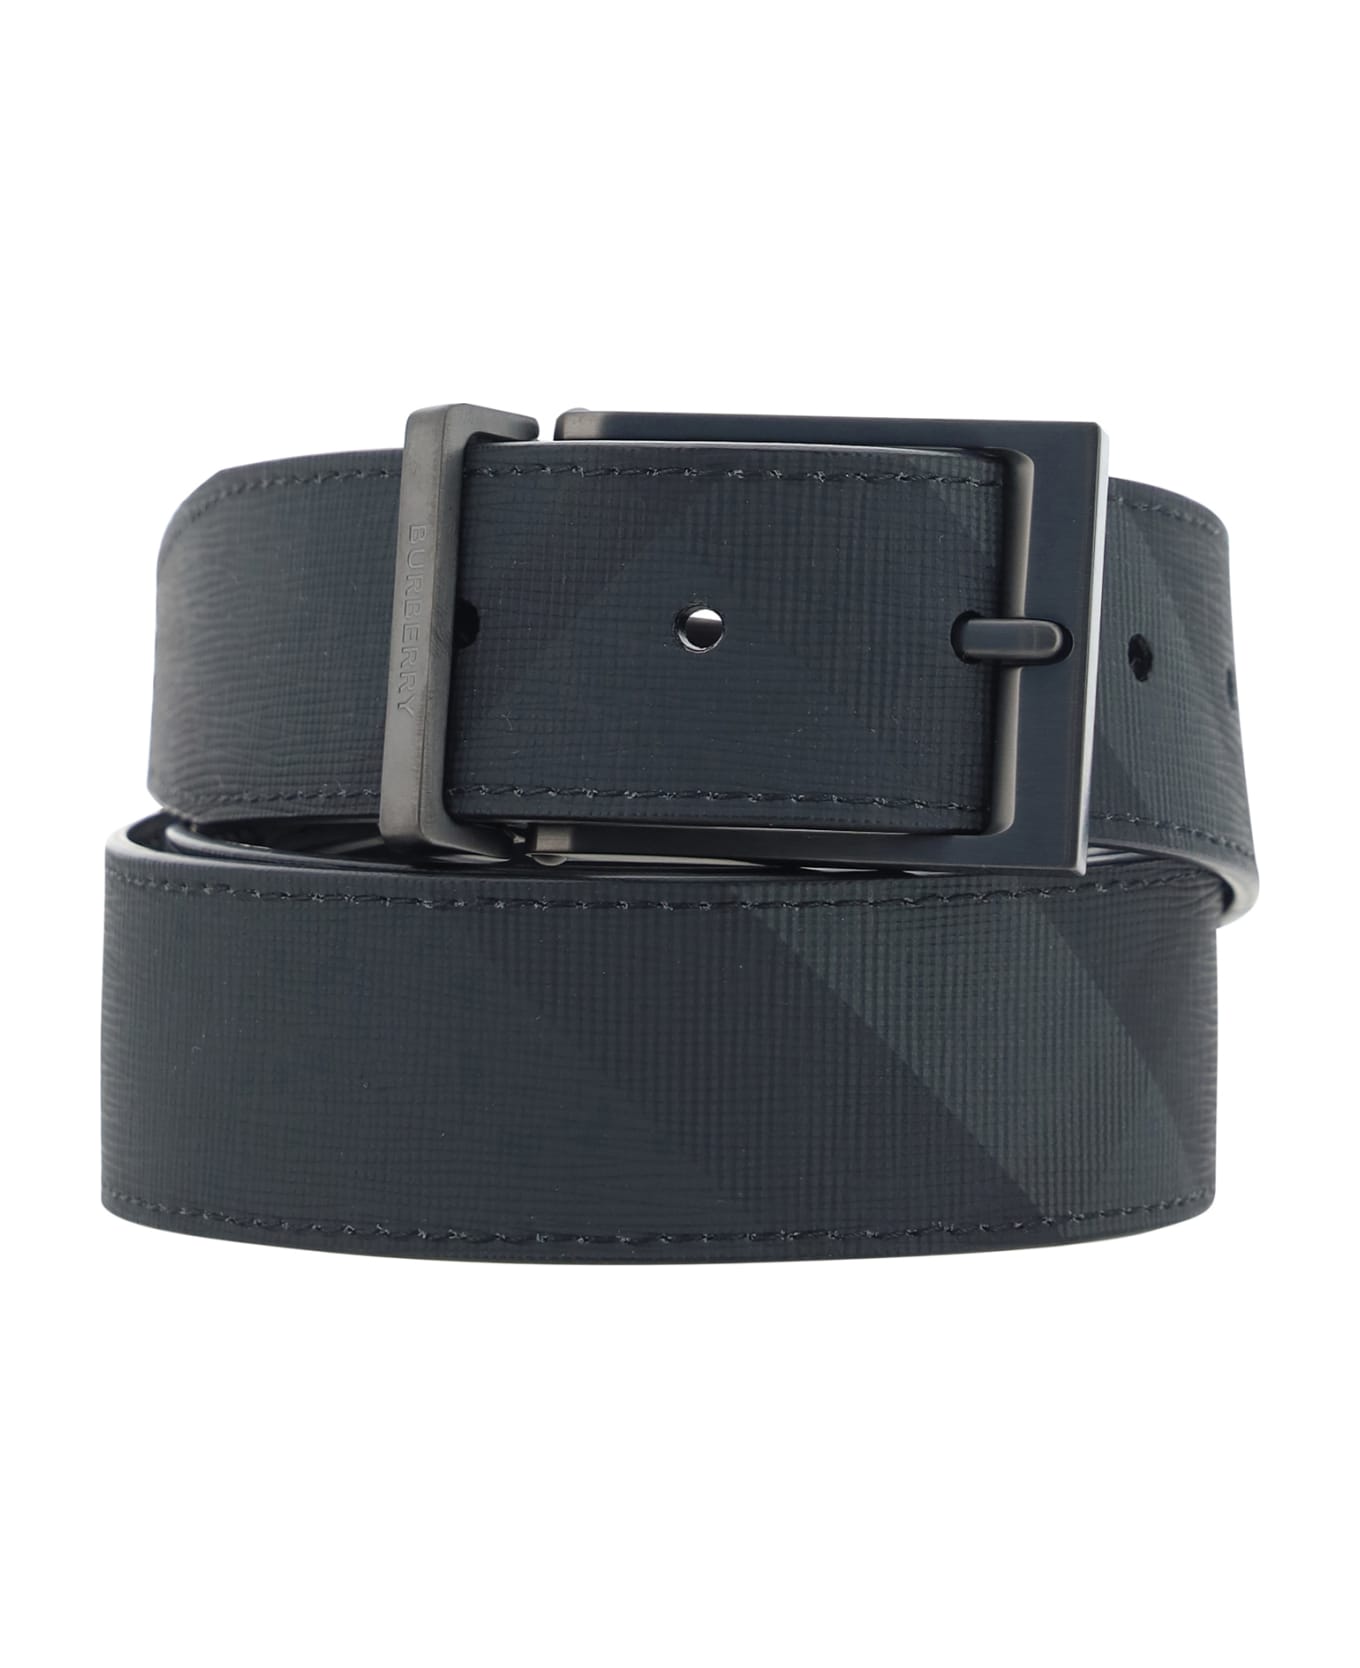 Burberry Louis35 Belt - Charcoal/graphite